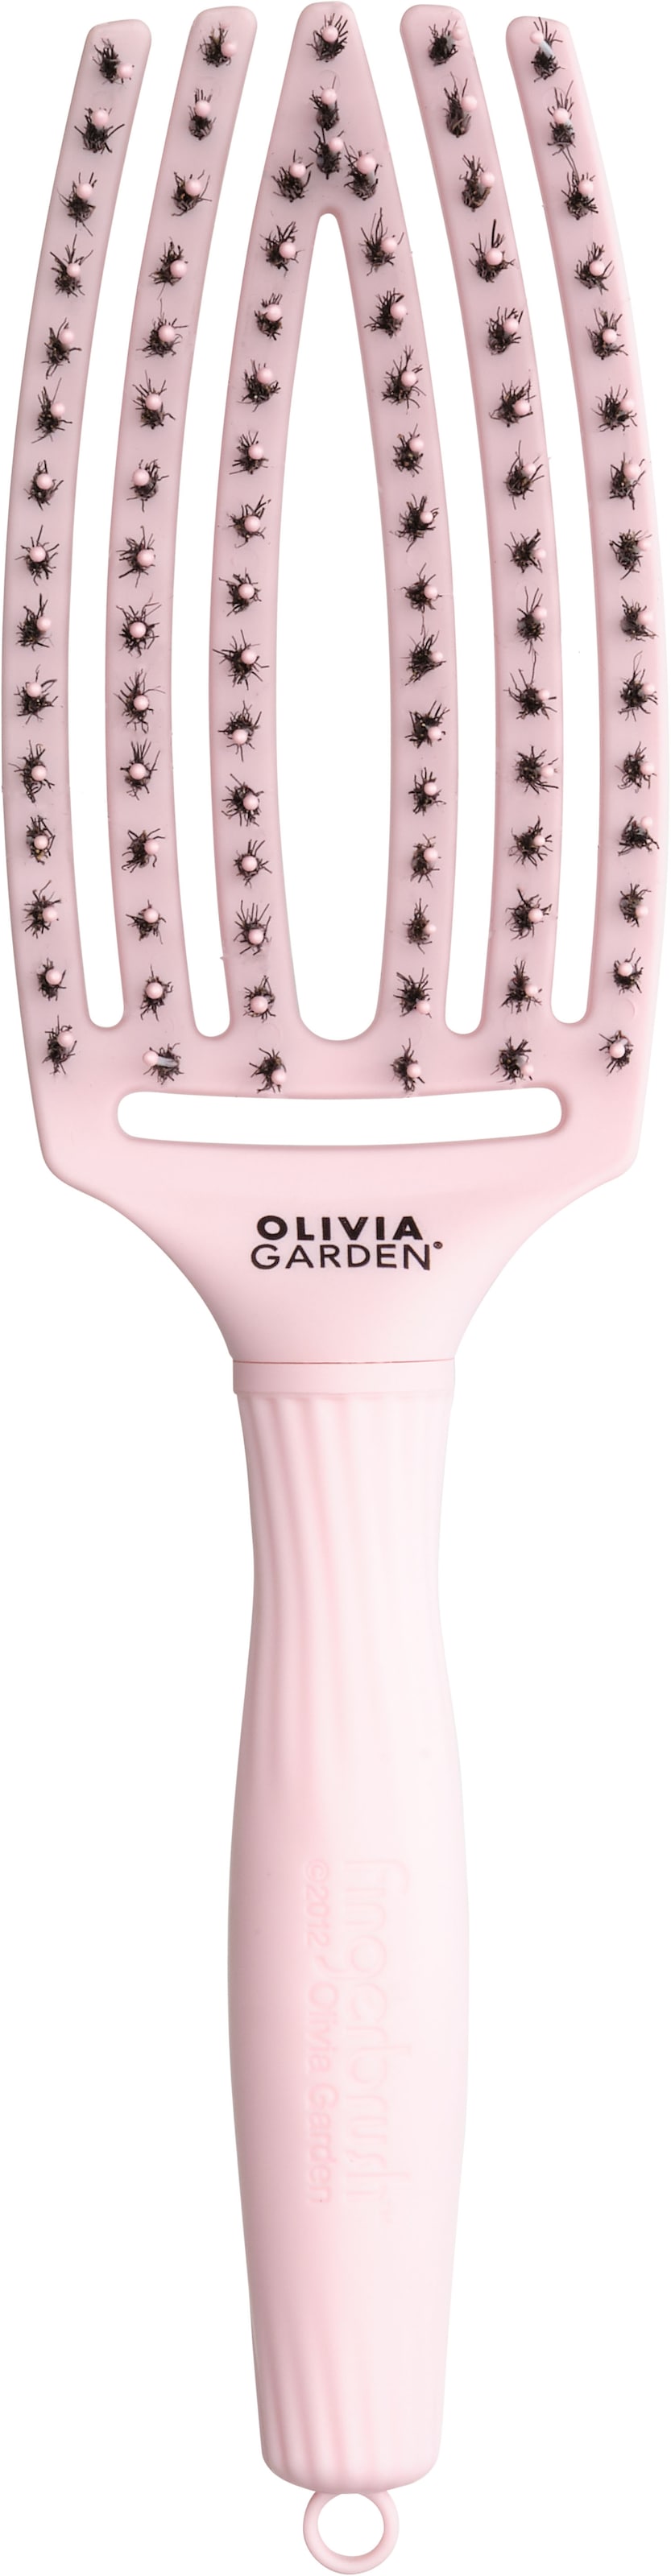 OLIVIA GARDEN Haarentwirrbürste »Fingerbrush Combo Pink medium« kaufen | Haarbürsten